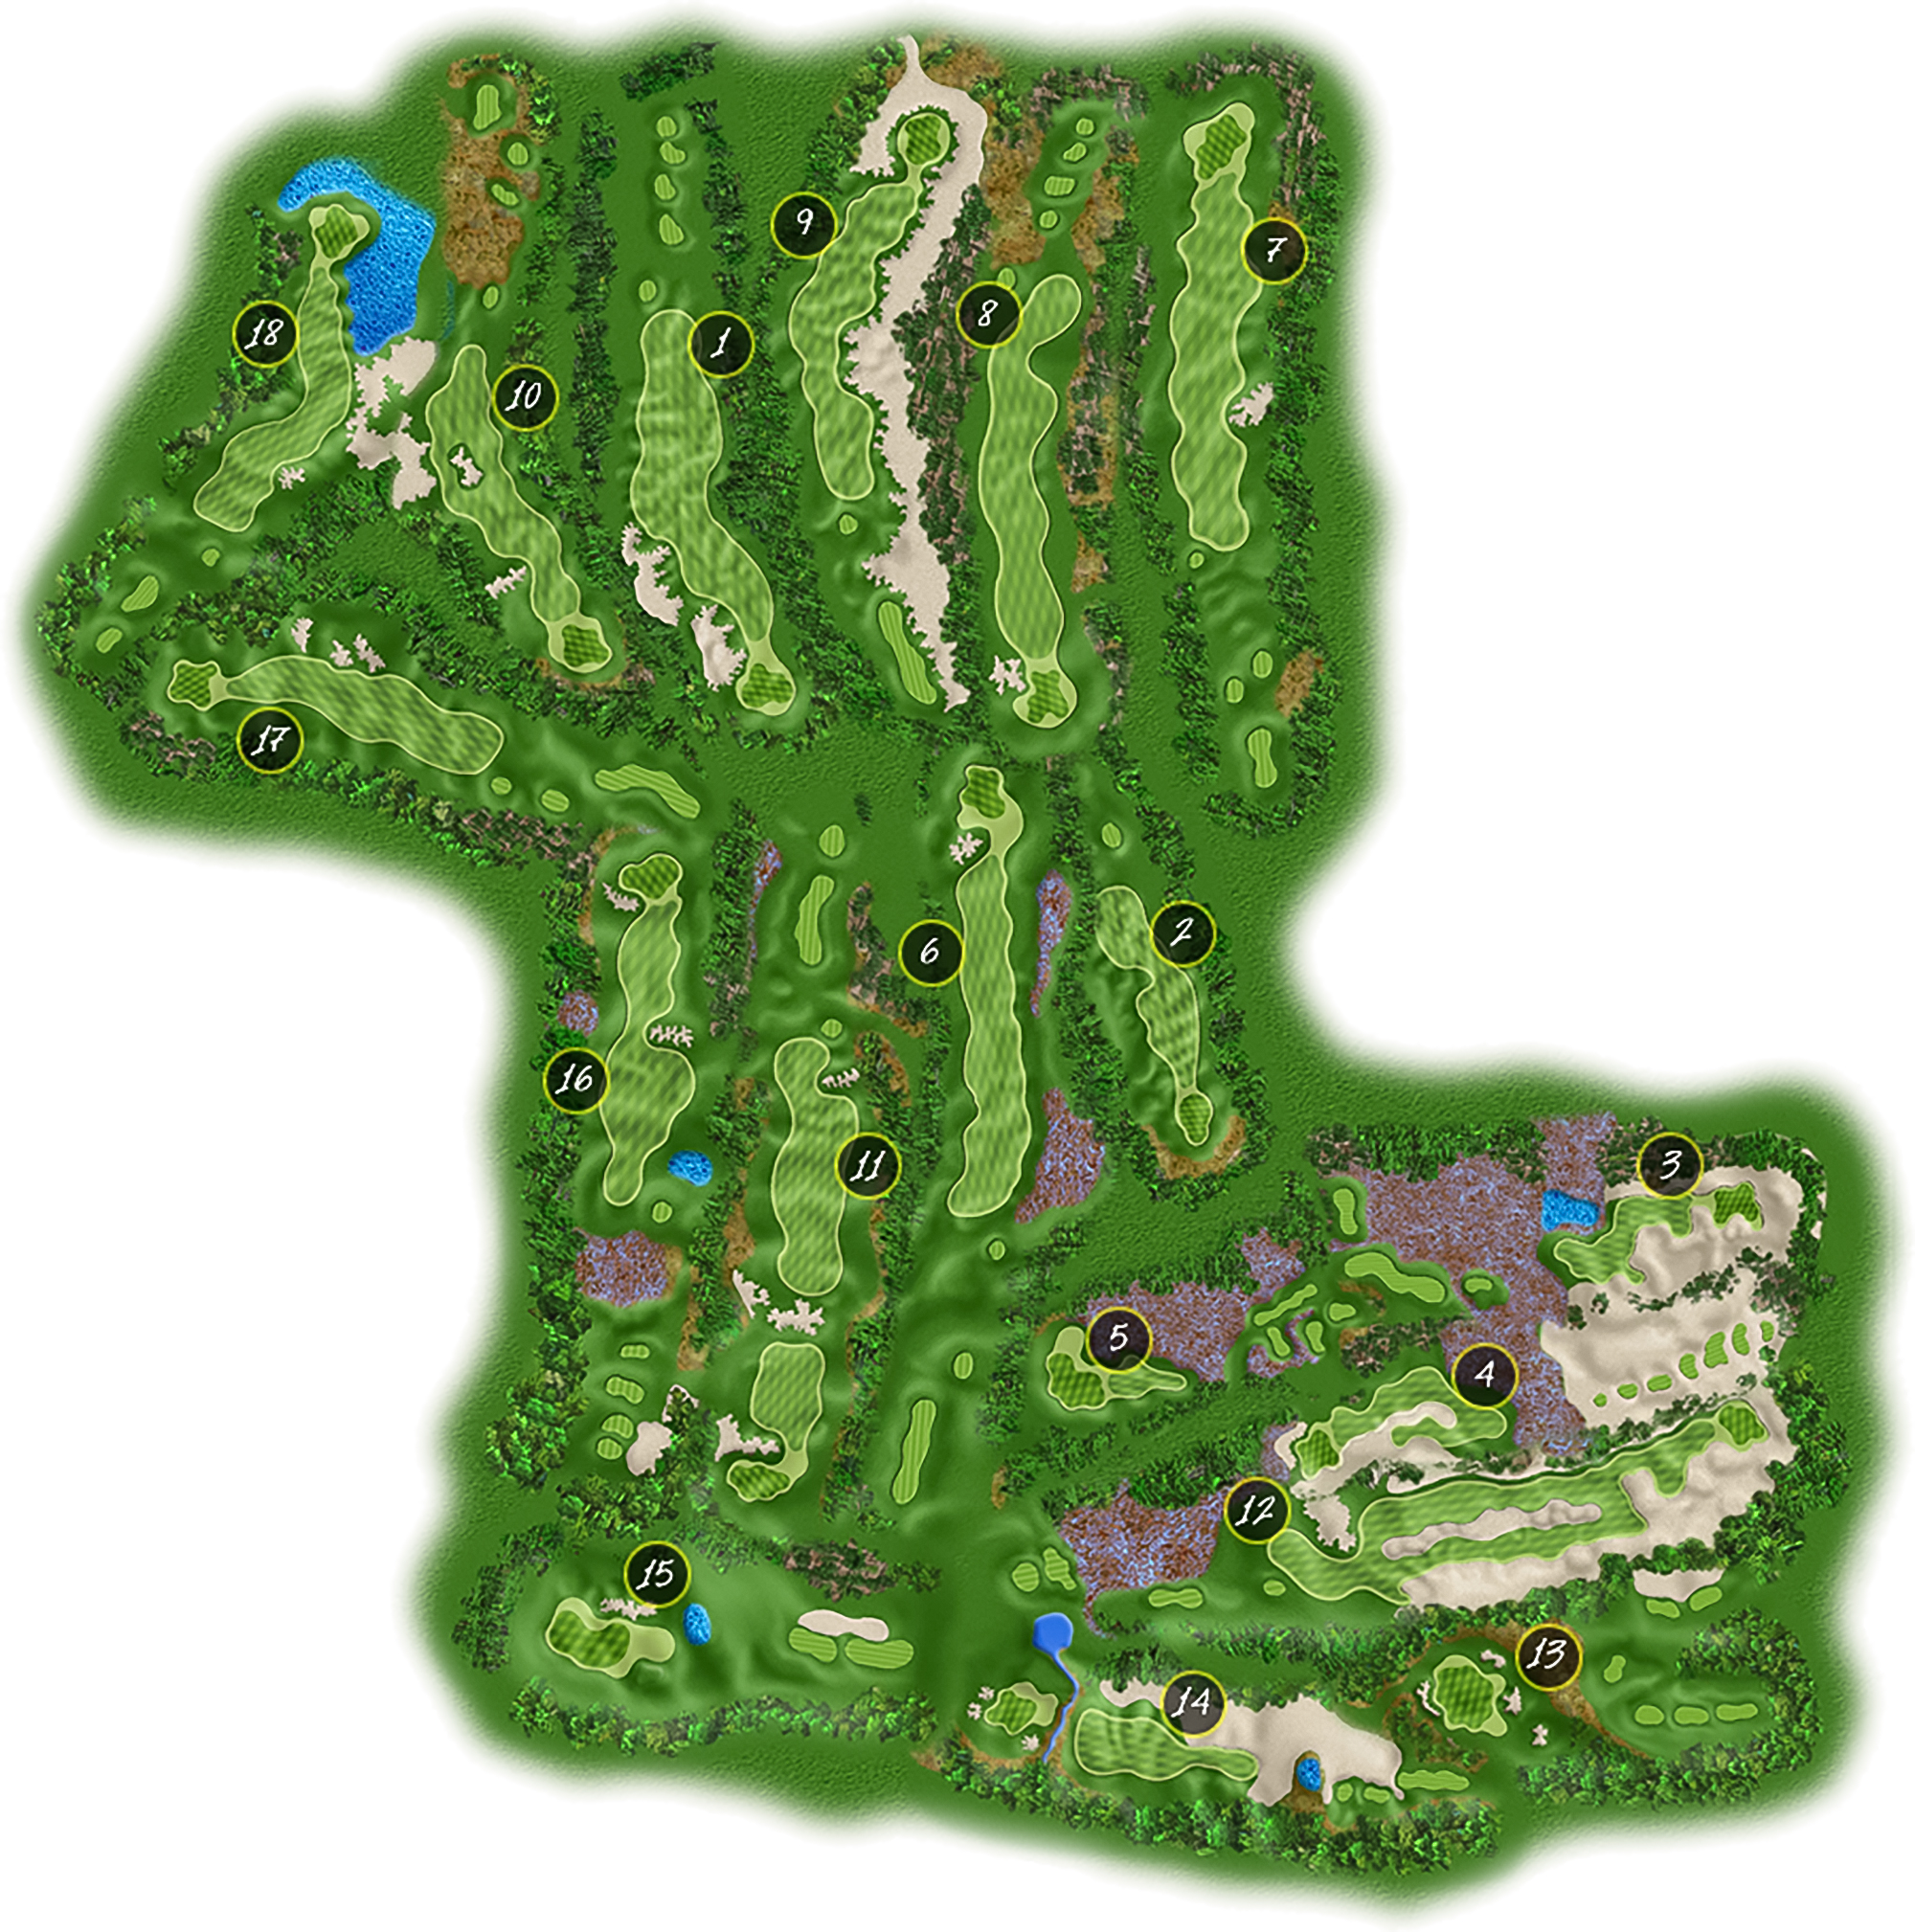 Golf Course Maps